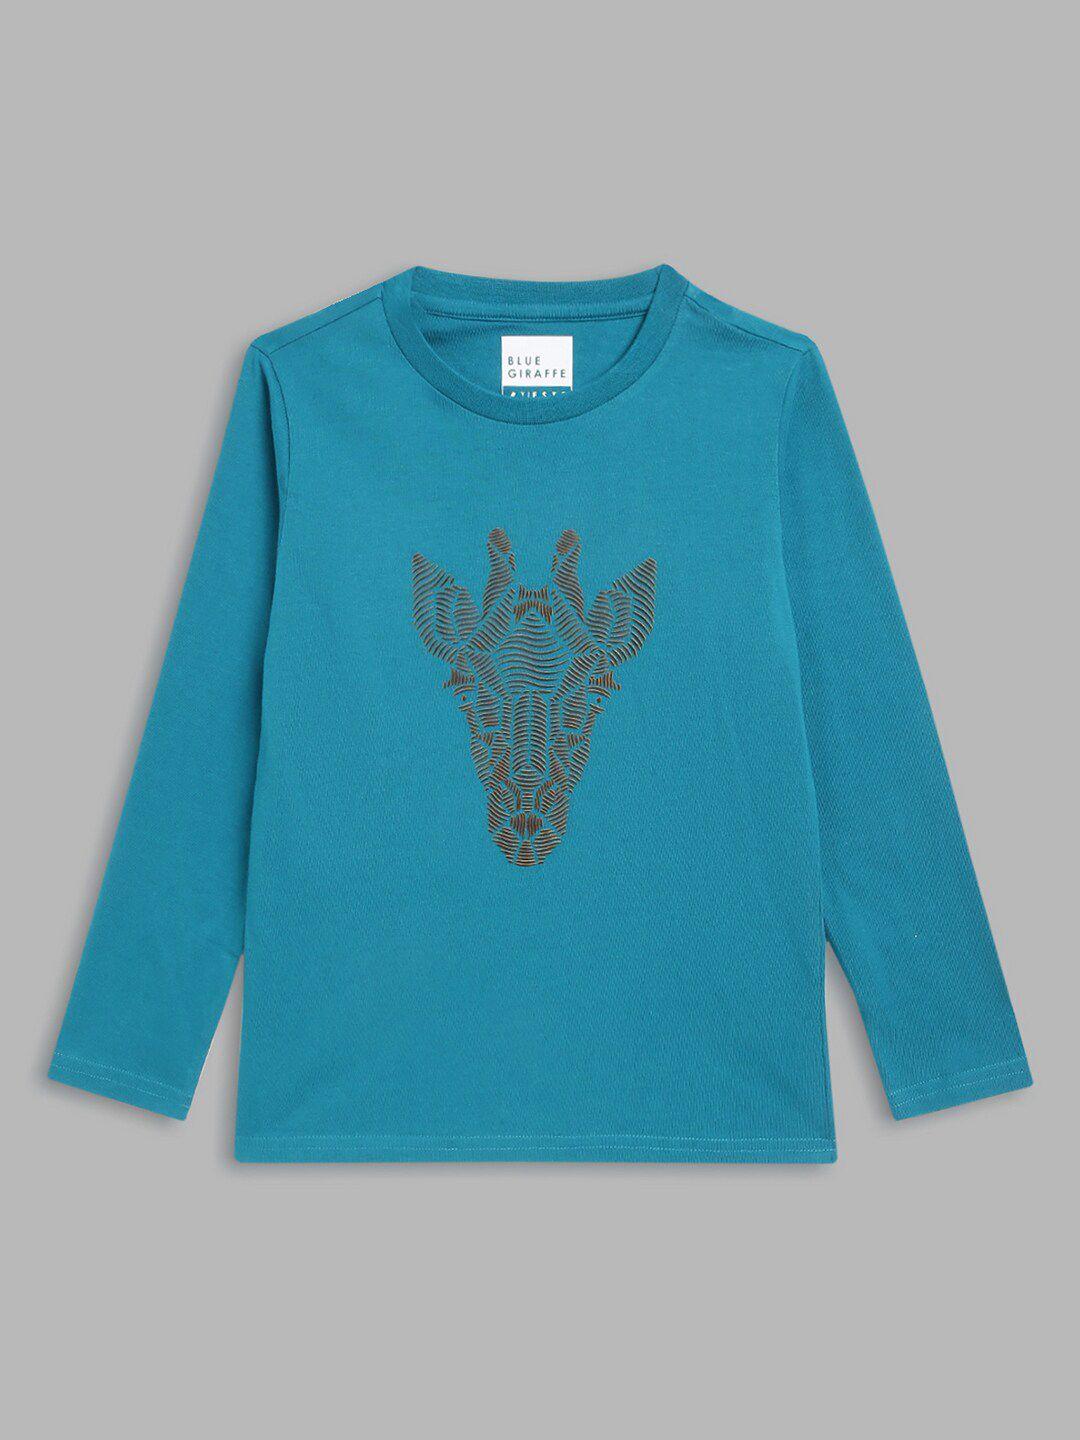 blue-giraffe-boys-teal-printed-sweatshirt